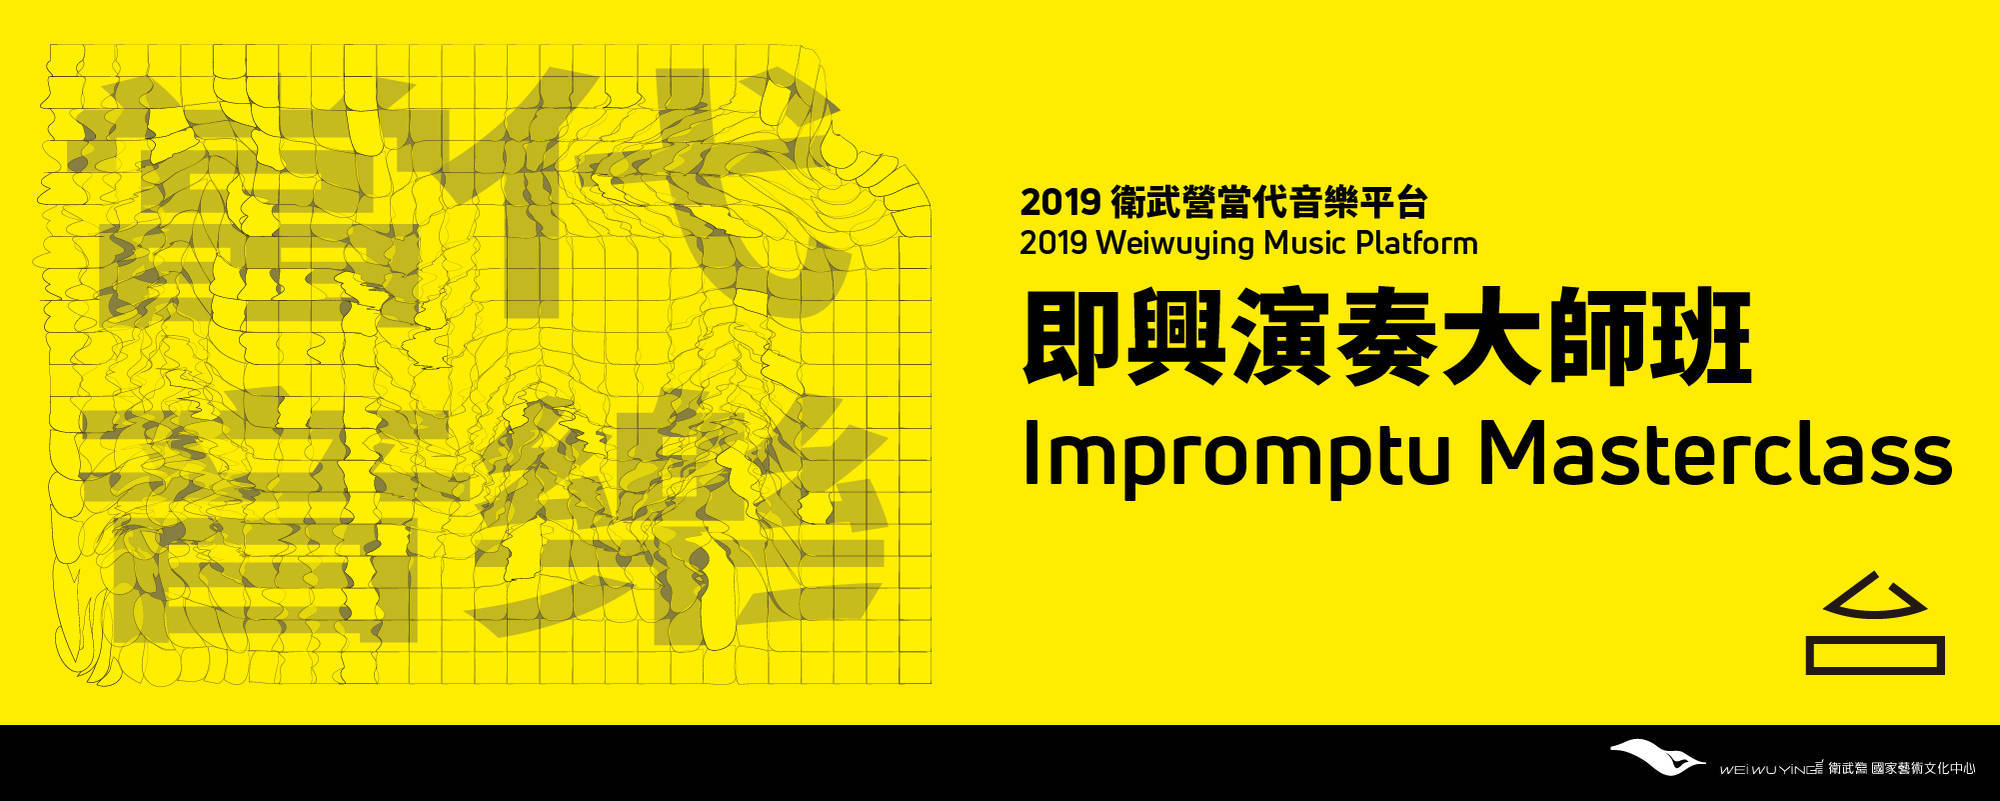 【2019 Weiwuying Contemporary Music Platform】Impromptu Masterclass